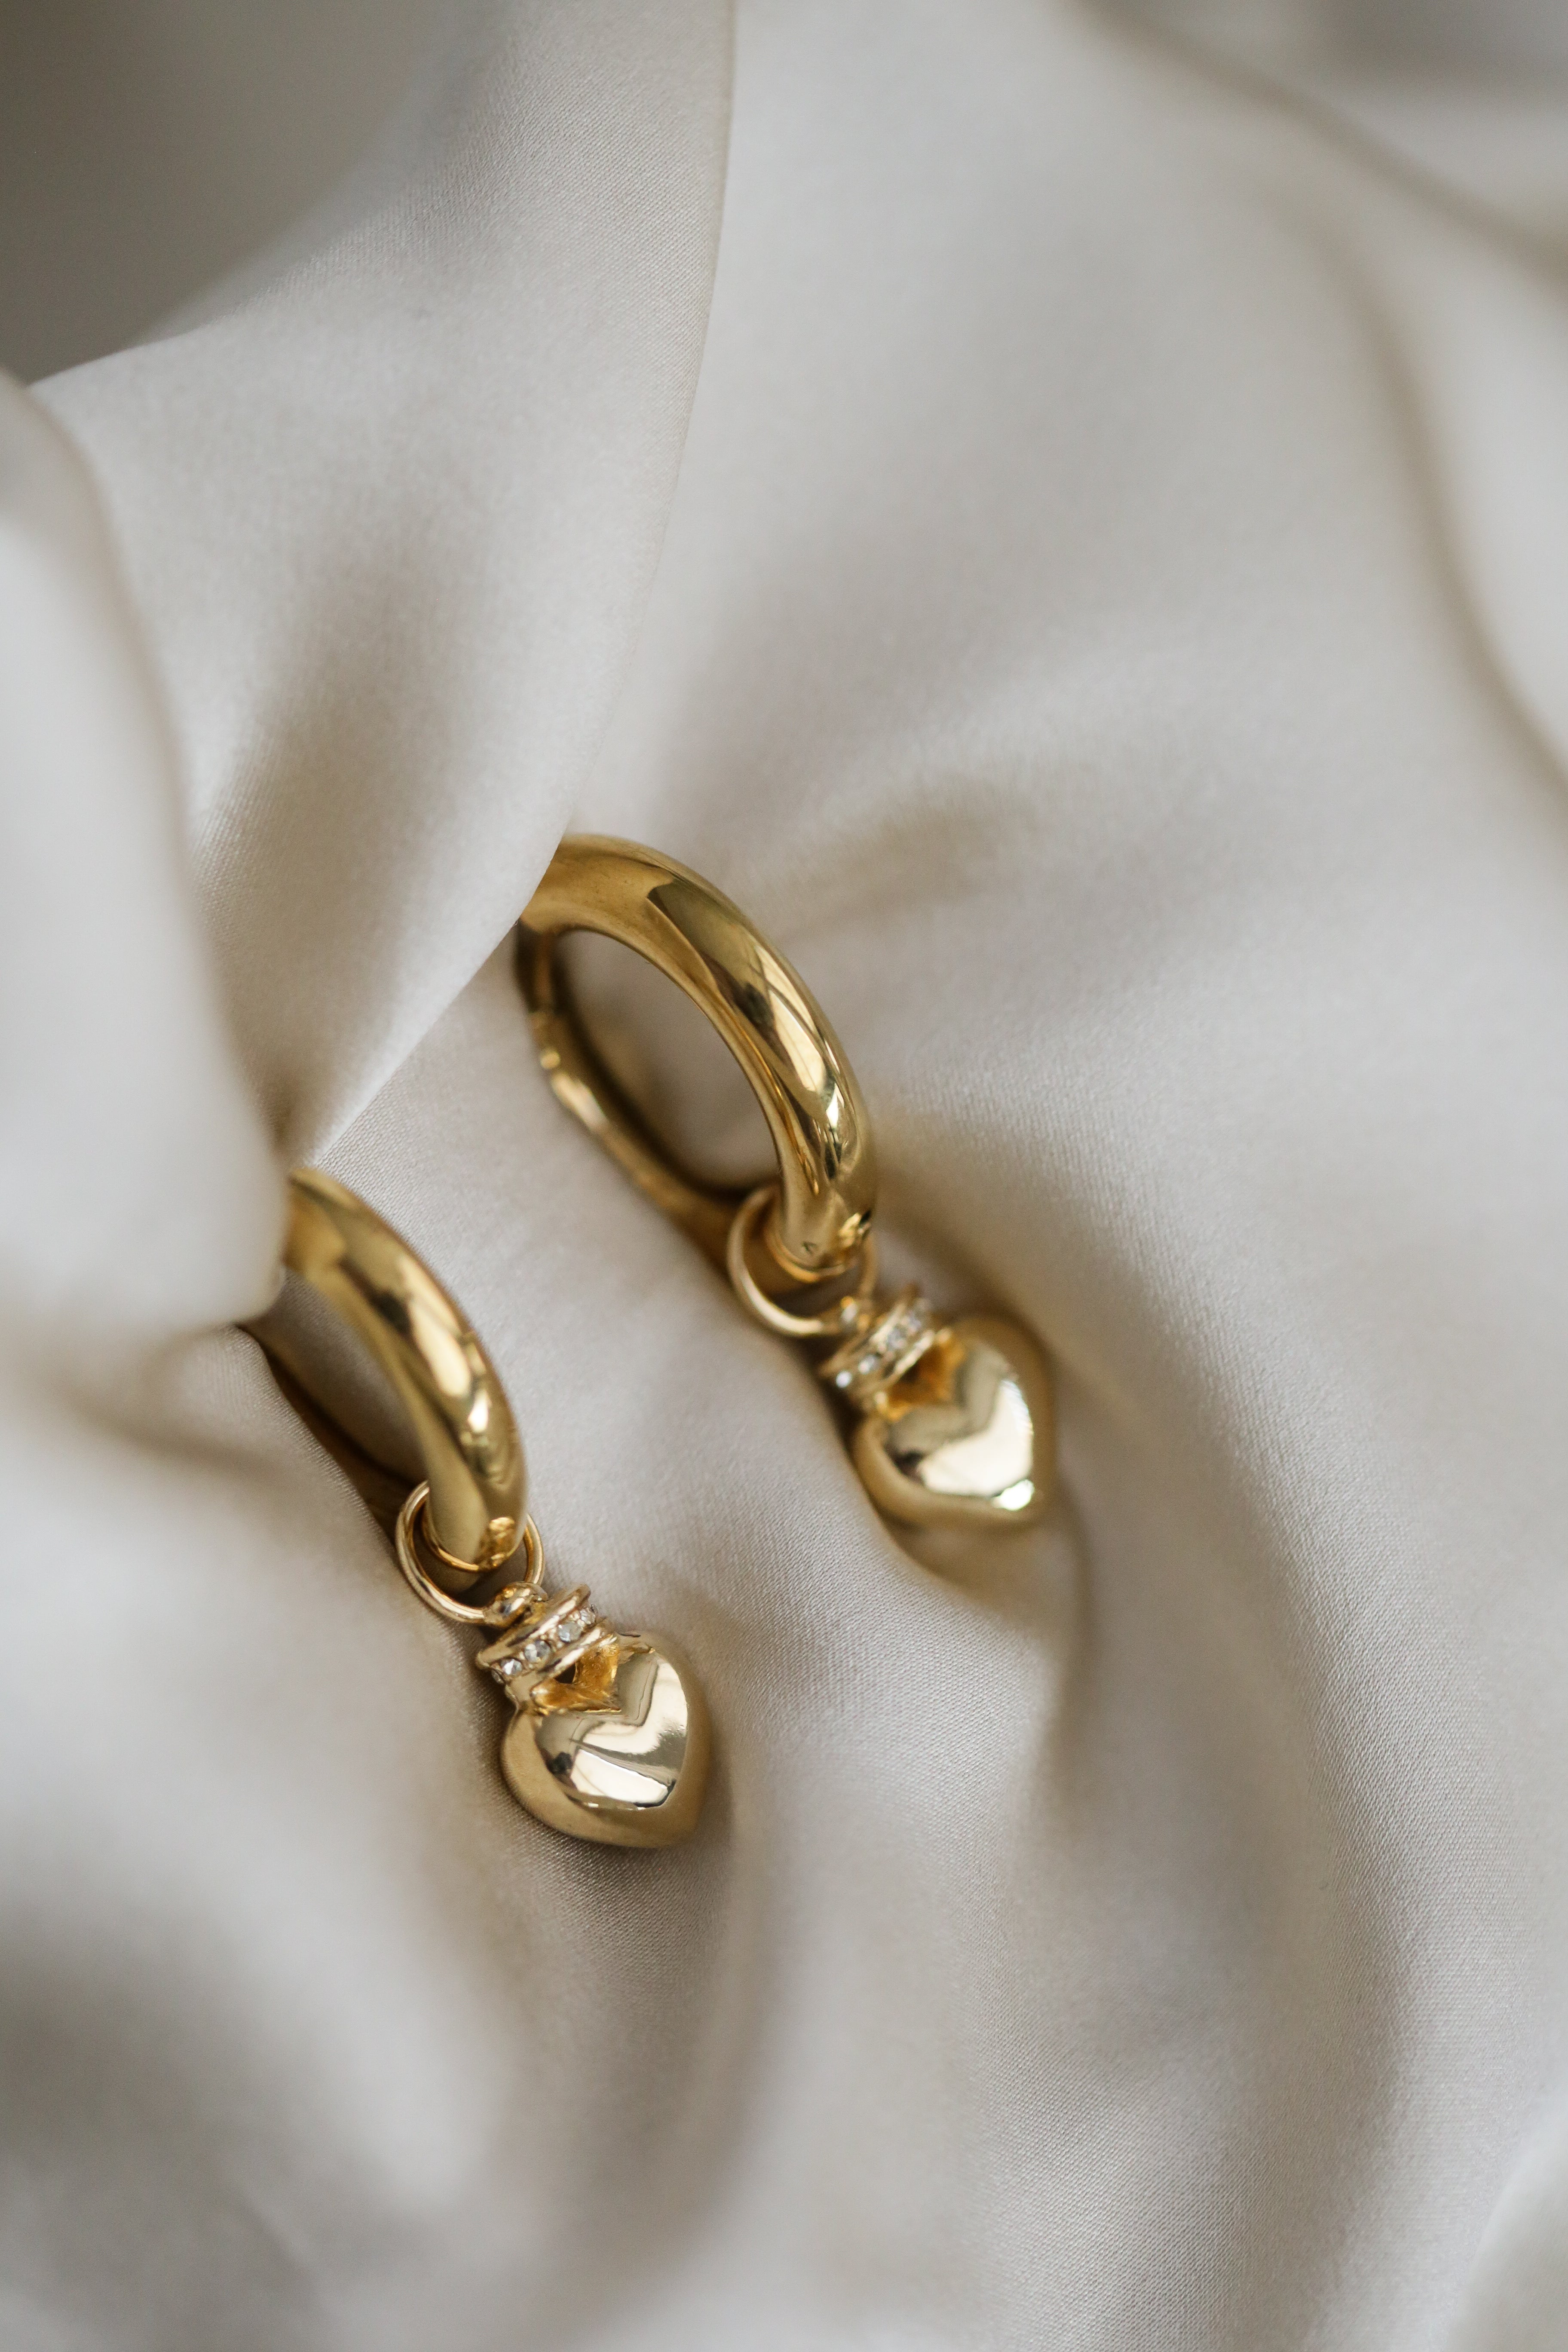 The Heart - Vintage Pendant Hoops - Boutique Minimaliste has waterproof, durable, elegant and vintage inspired jewelry